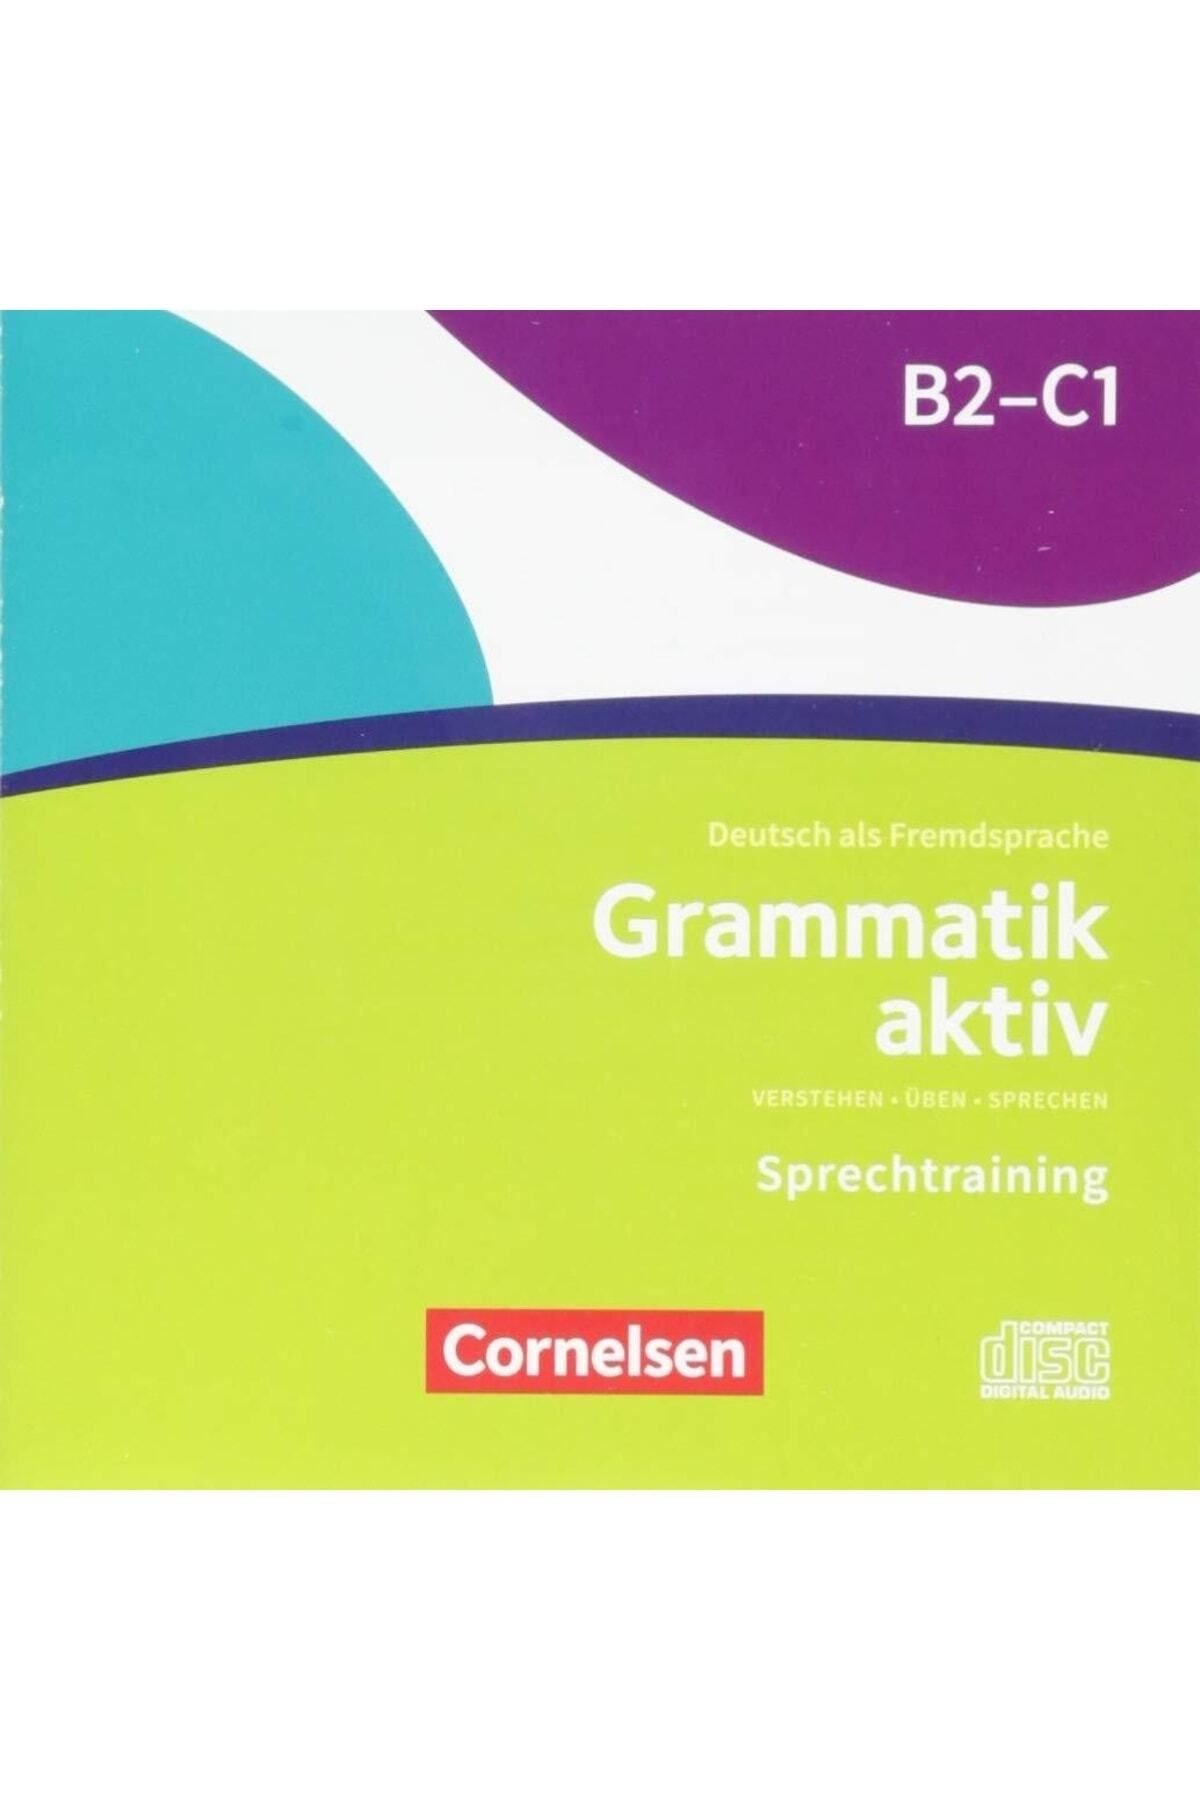 Grammatik b2. Немецкий книга Grammatik KTIV. B2-c1 немецкий книга Grammatik ответ. Grammatik c. Grammatik aktiv a1-b1 купить.